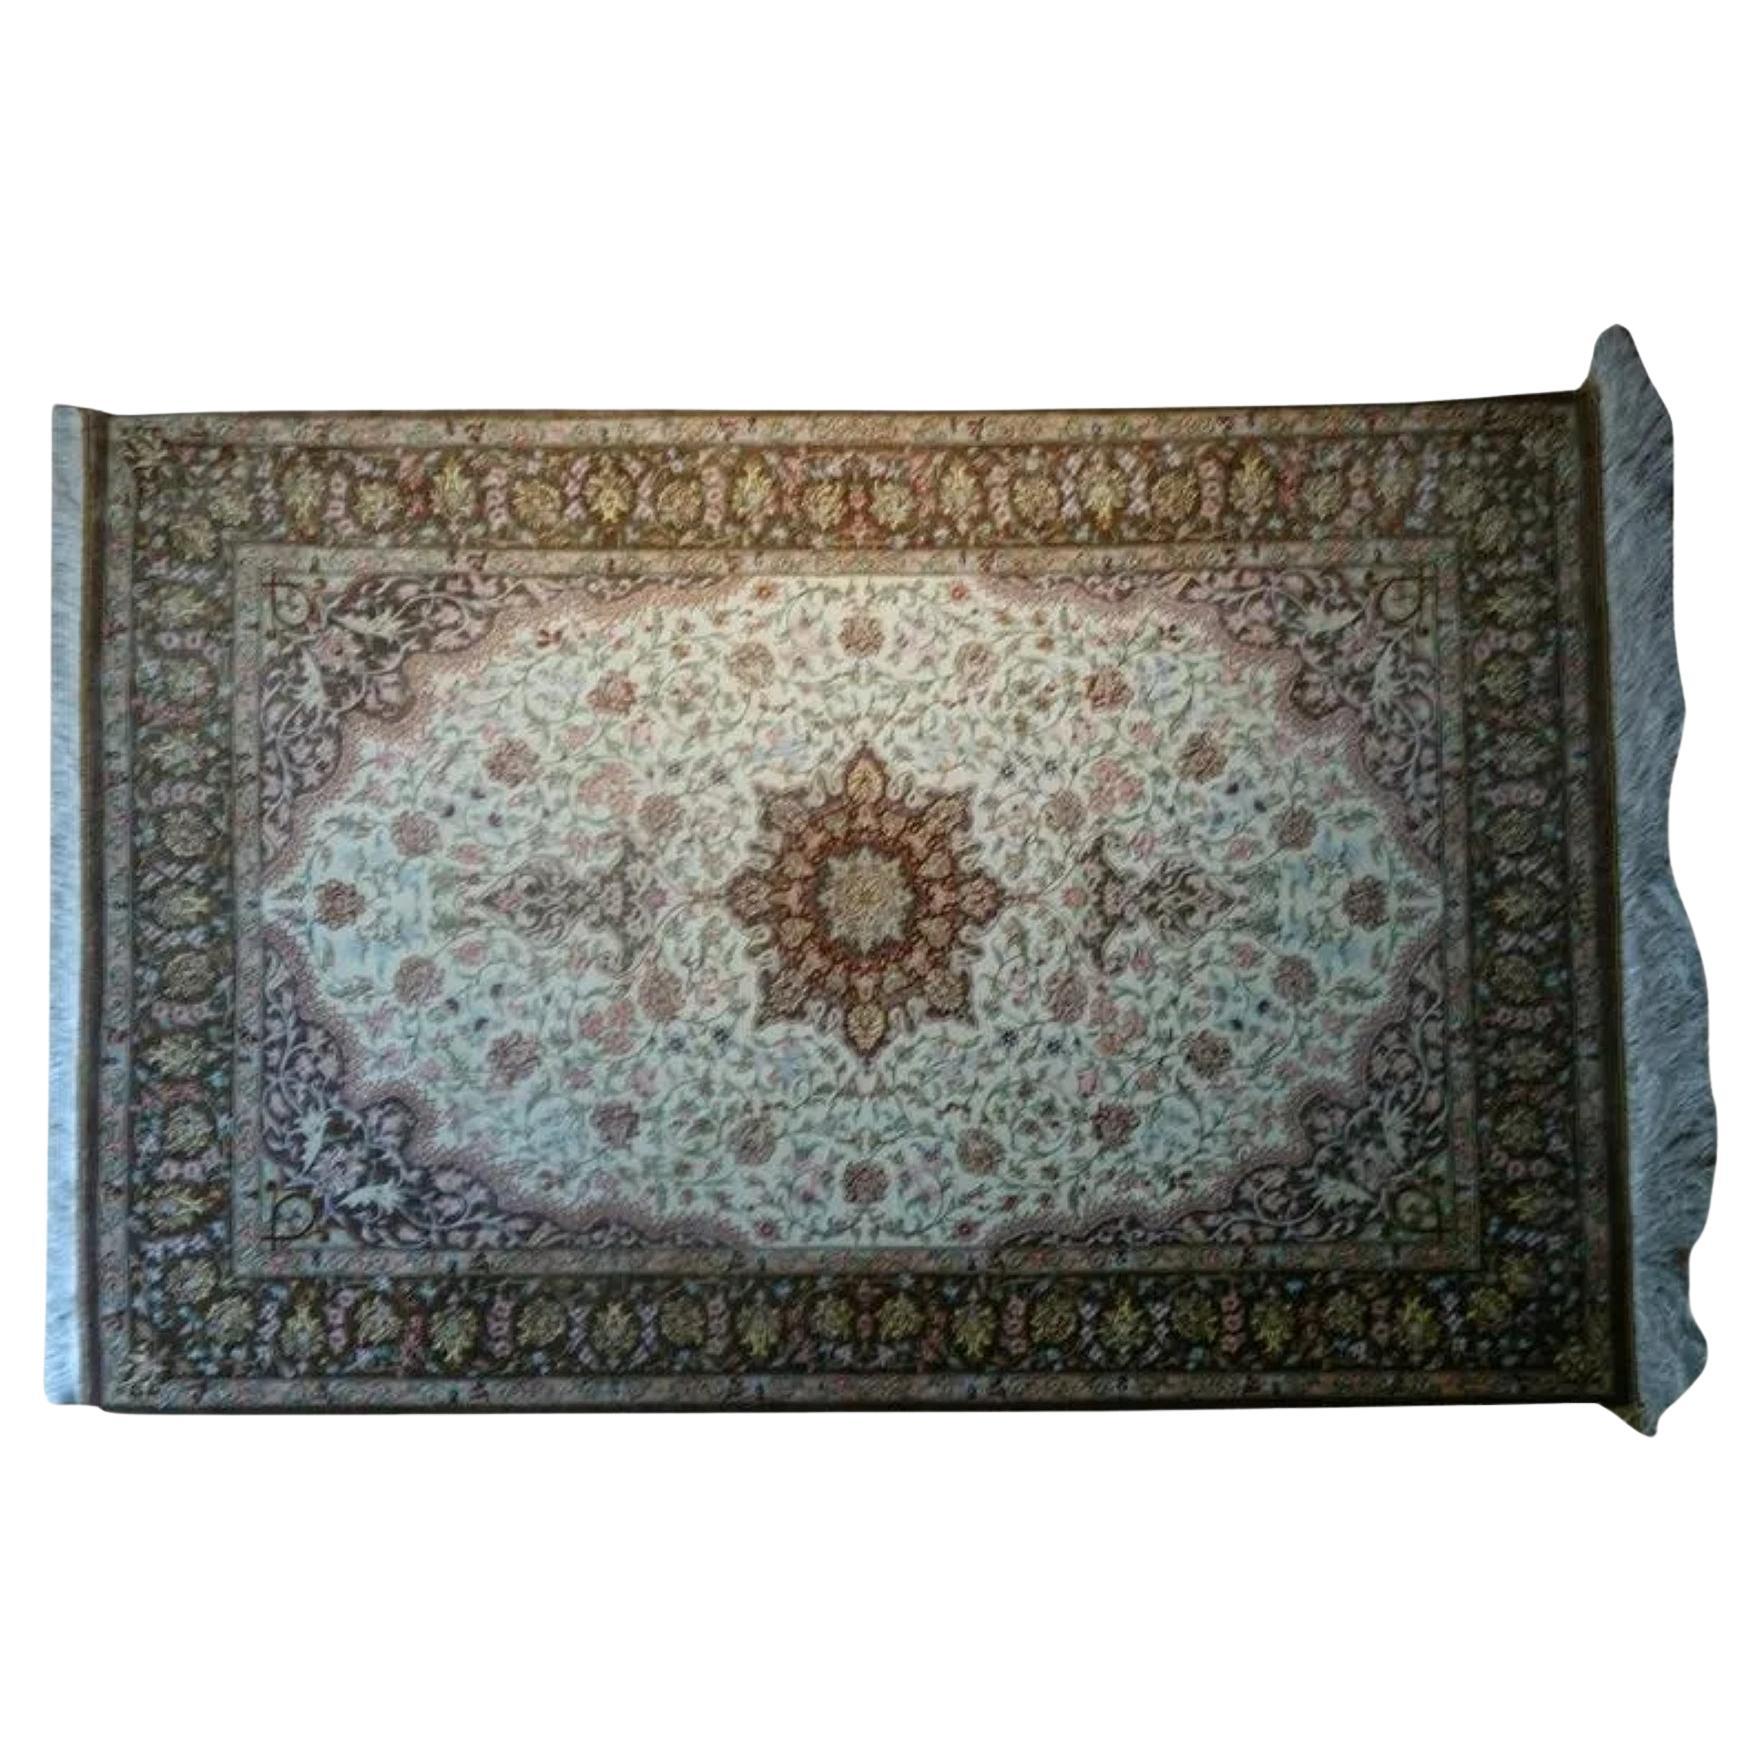 Very fine Persian Silk Qum Rug- 5' x 3.5'